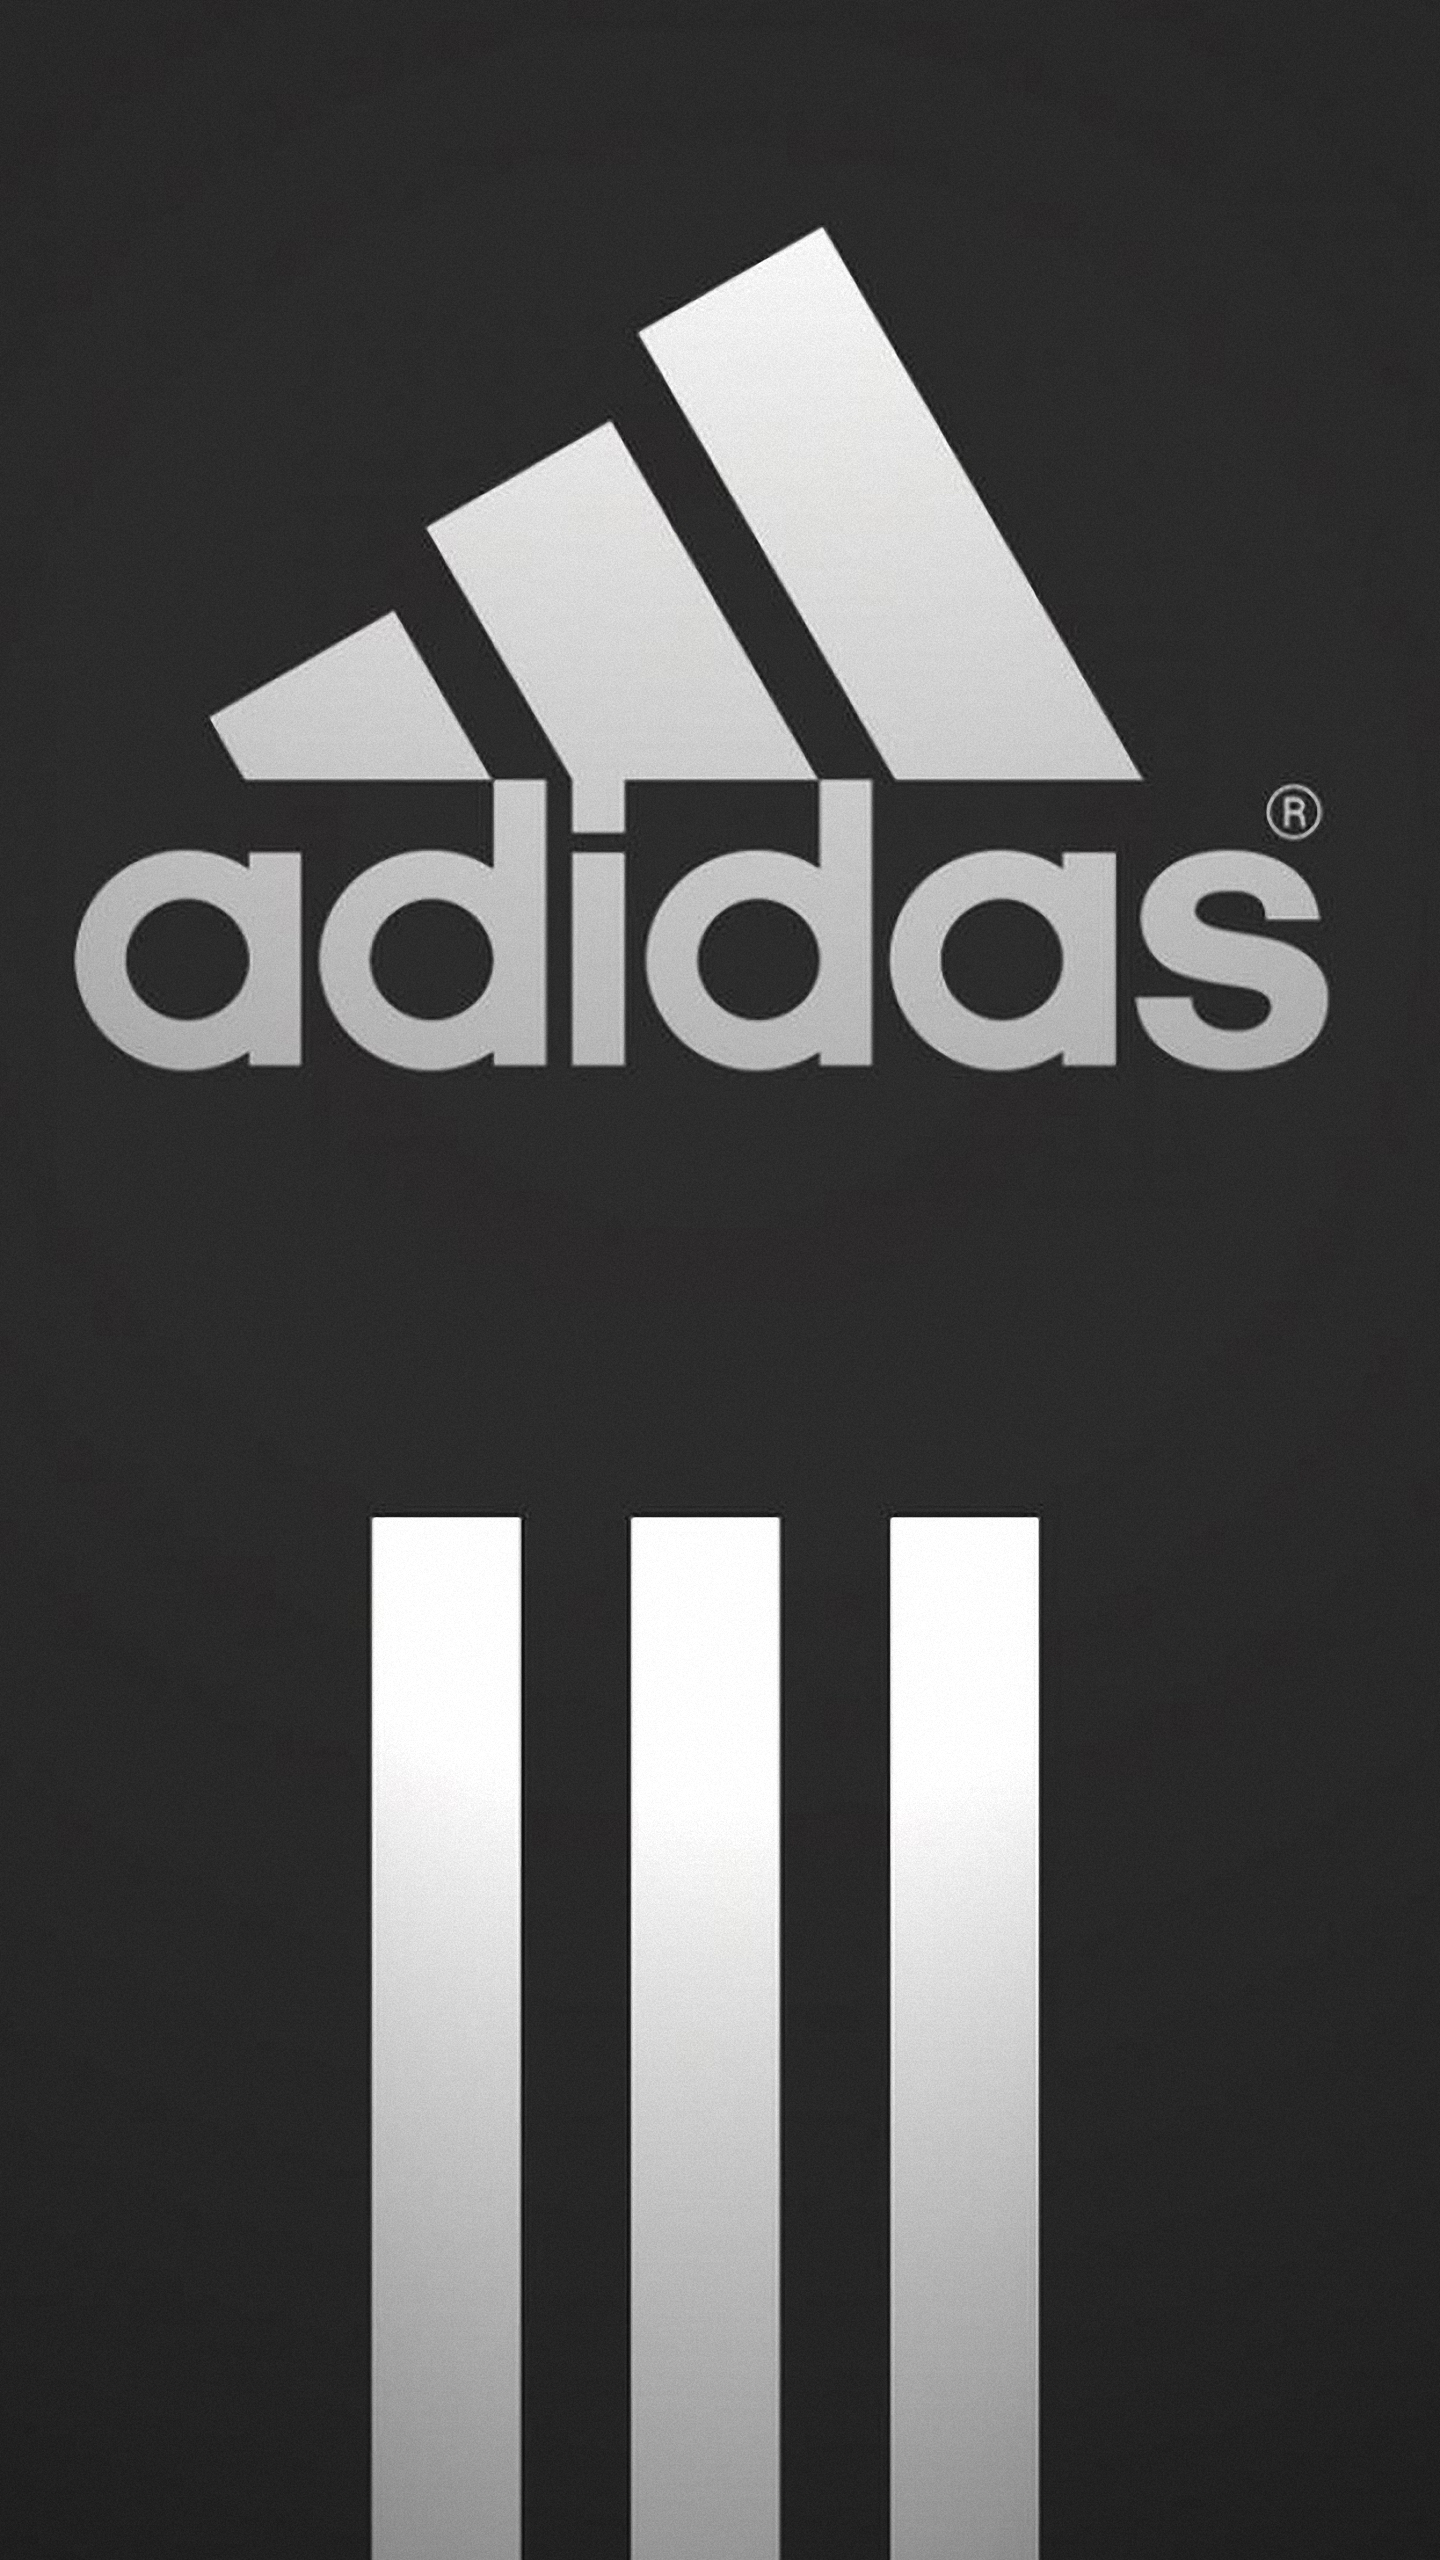 adidas wallpaper hd iphone